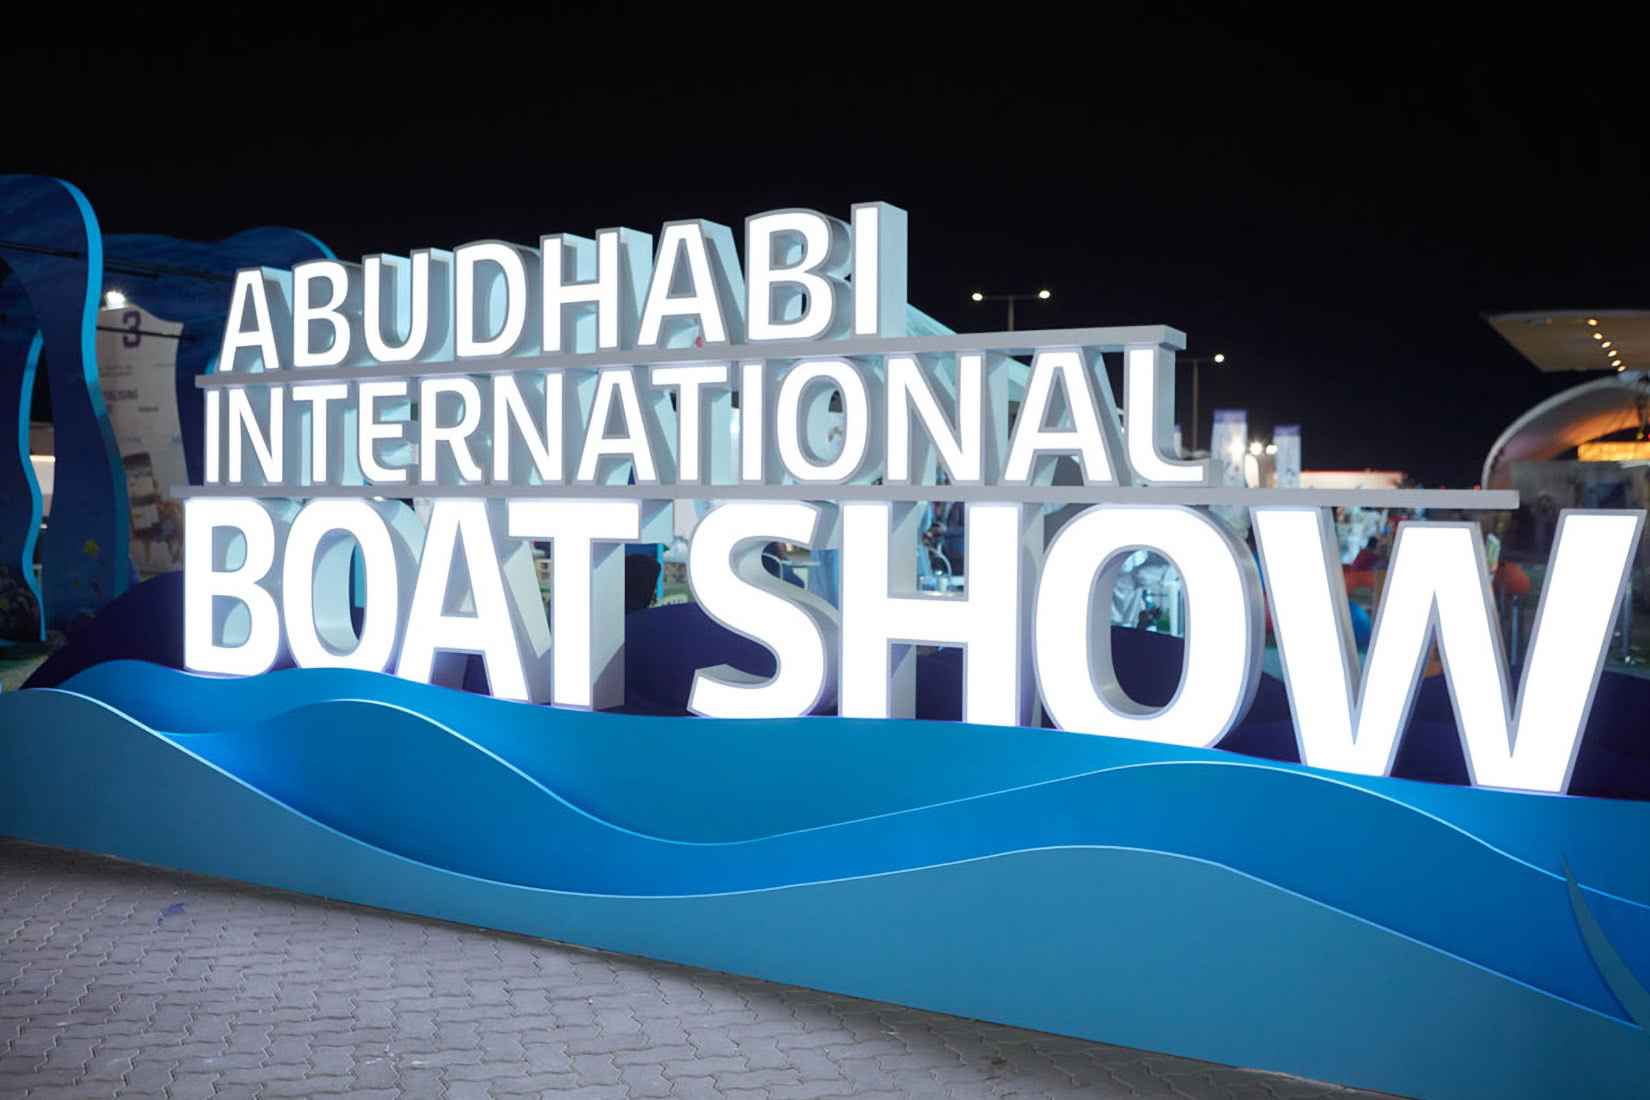 Abu Dhabi International Boat Show 2021 registrations - Luxe Digital